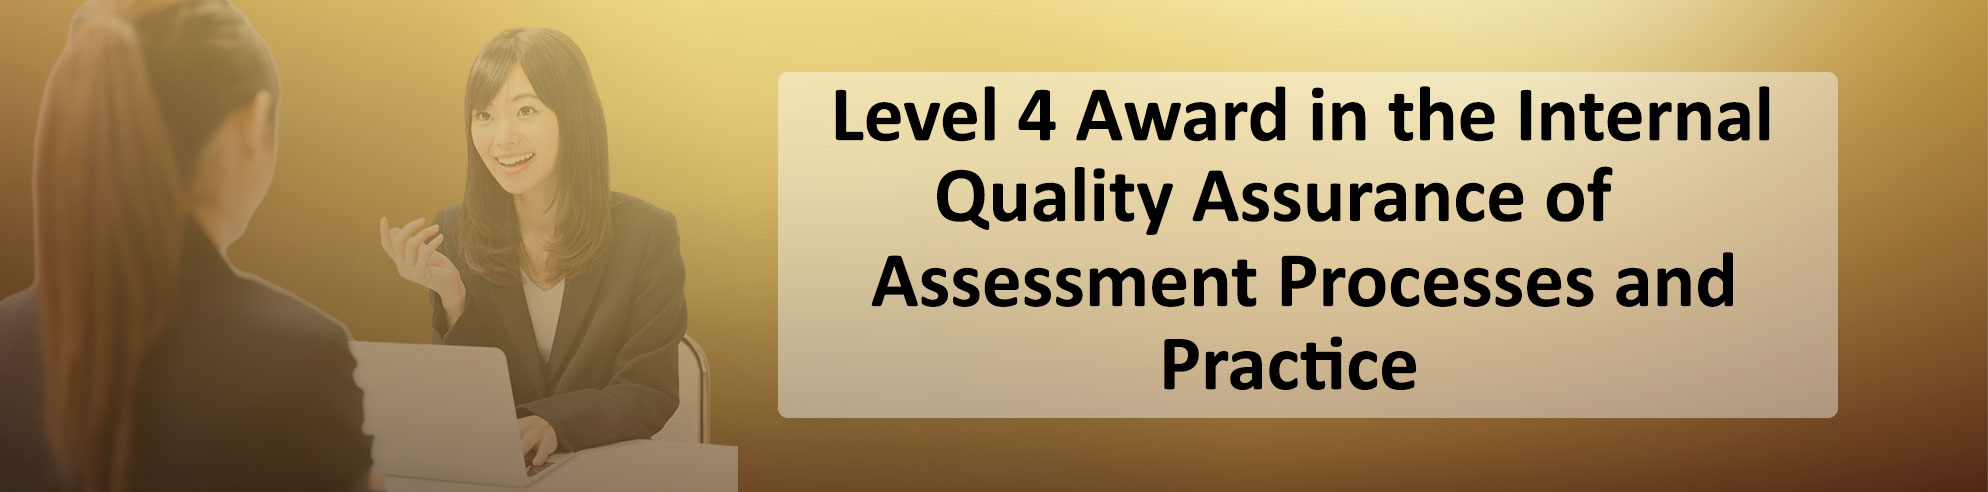 iqa qualifications, internal assessment processes